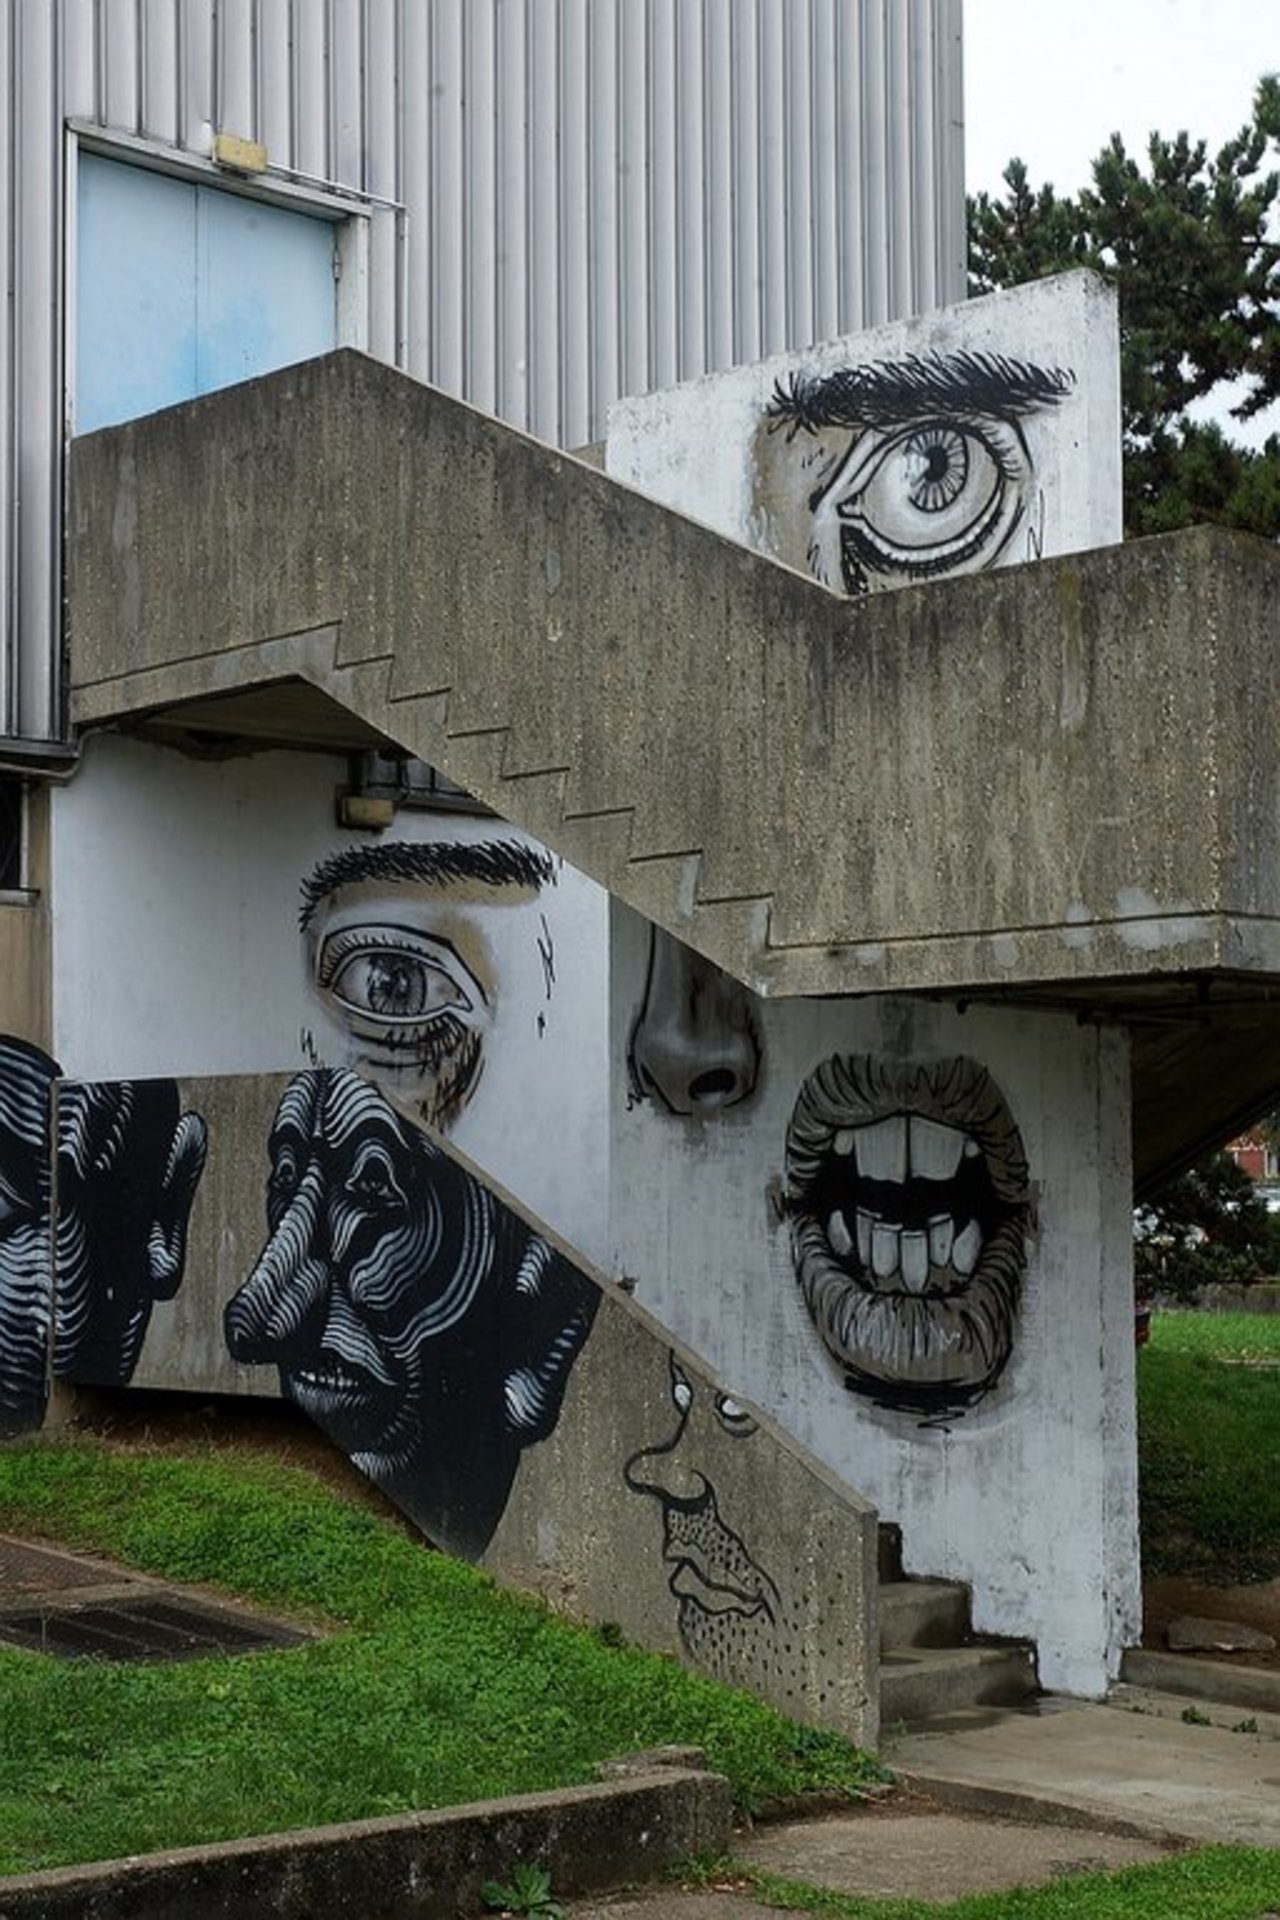 Street Art by anonymous in #Vitry-sur-Seine http://www.urbacolors.com #art #mural #graffiti #streetart https://t.co/JeXRGRVLbo